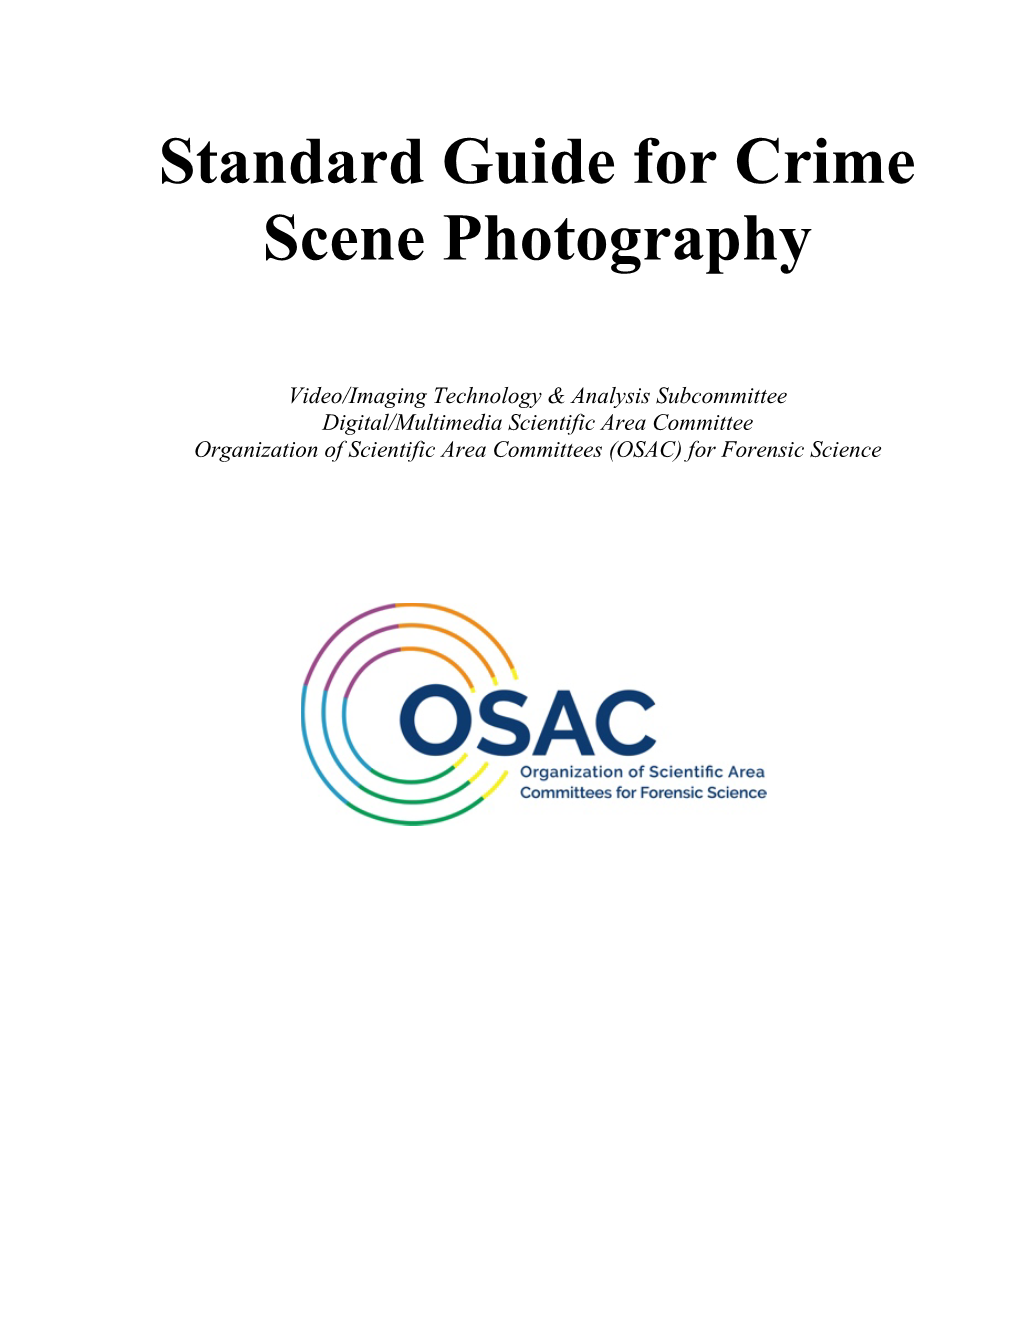 Standard Guide for Crime Scene Photography